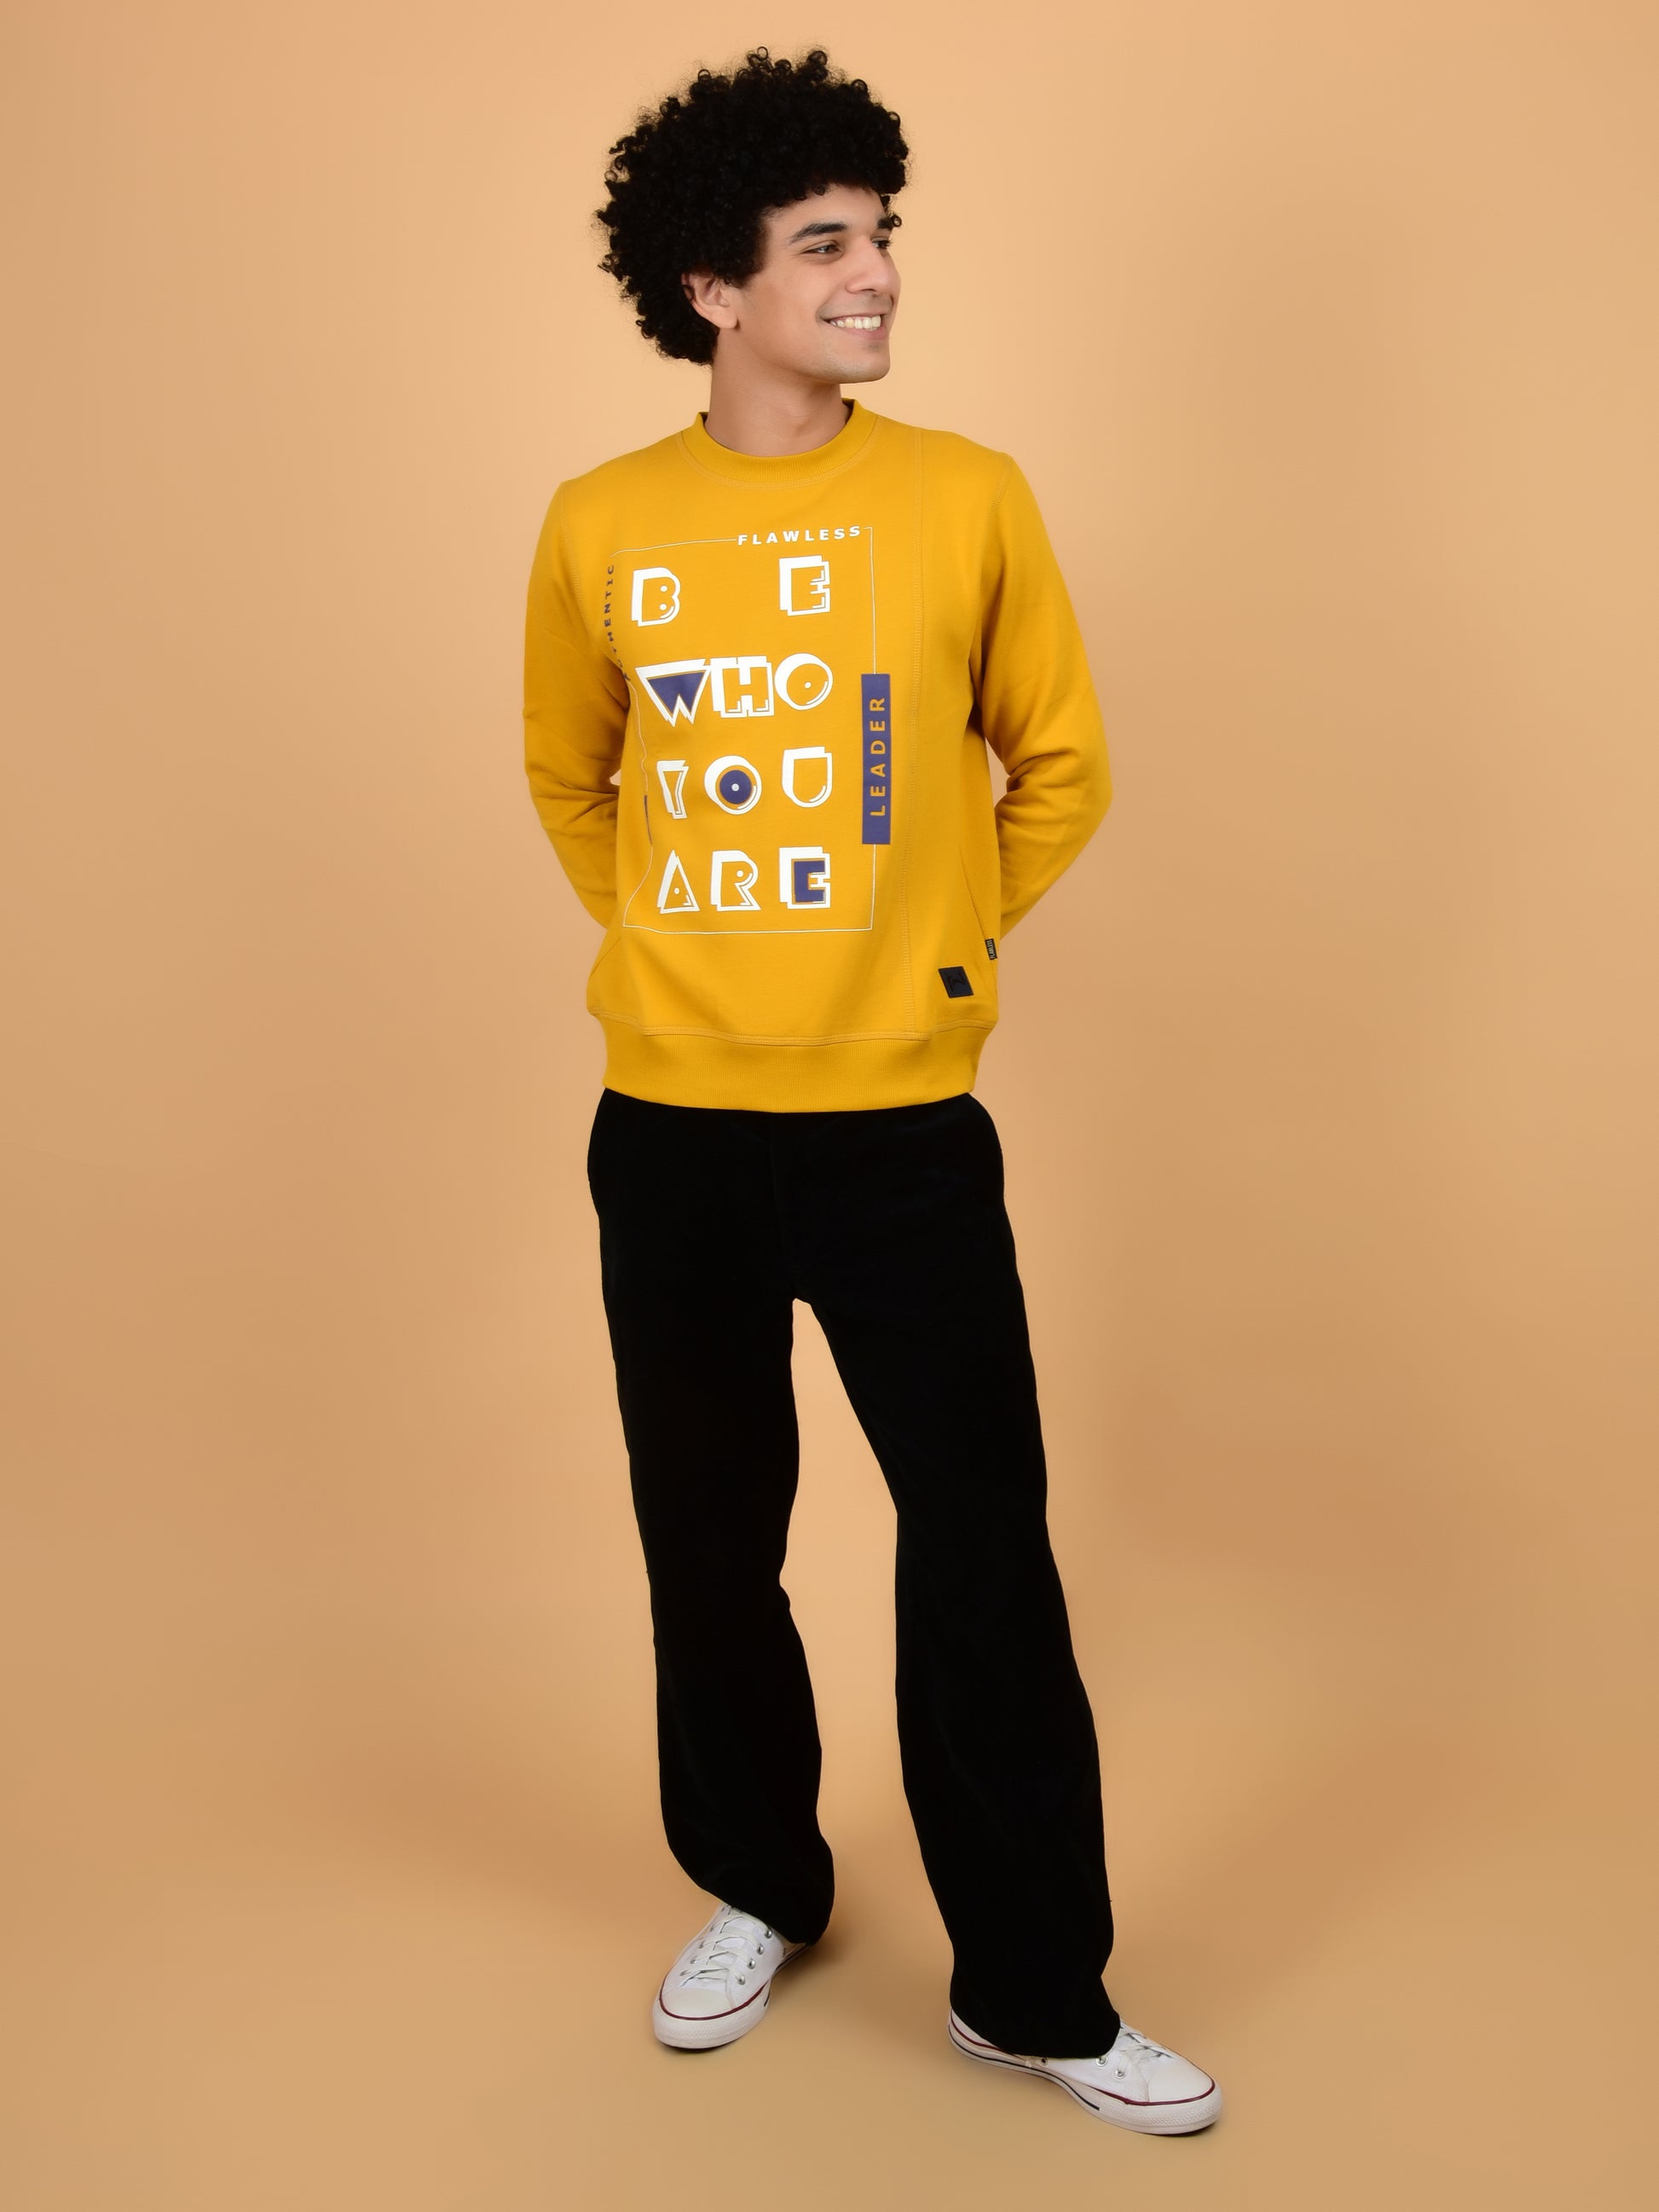 Flawless Men Typographic Swag Sweatshirt Being Flawless